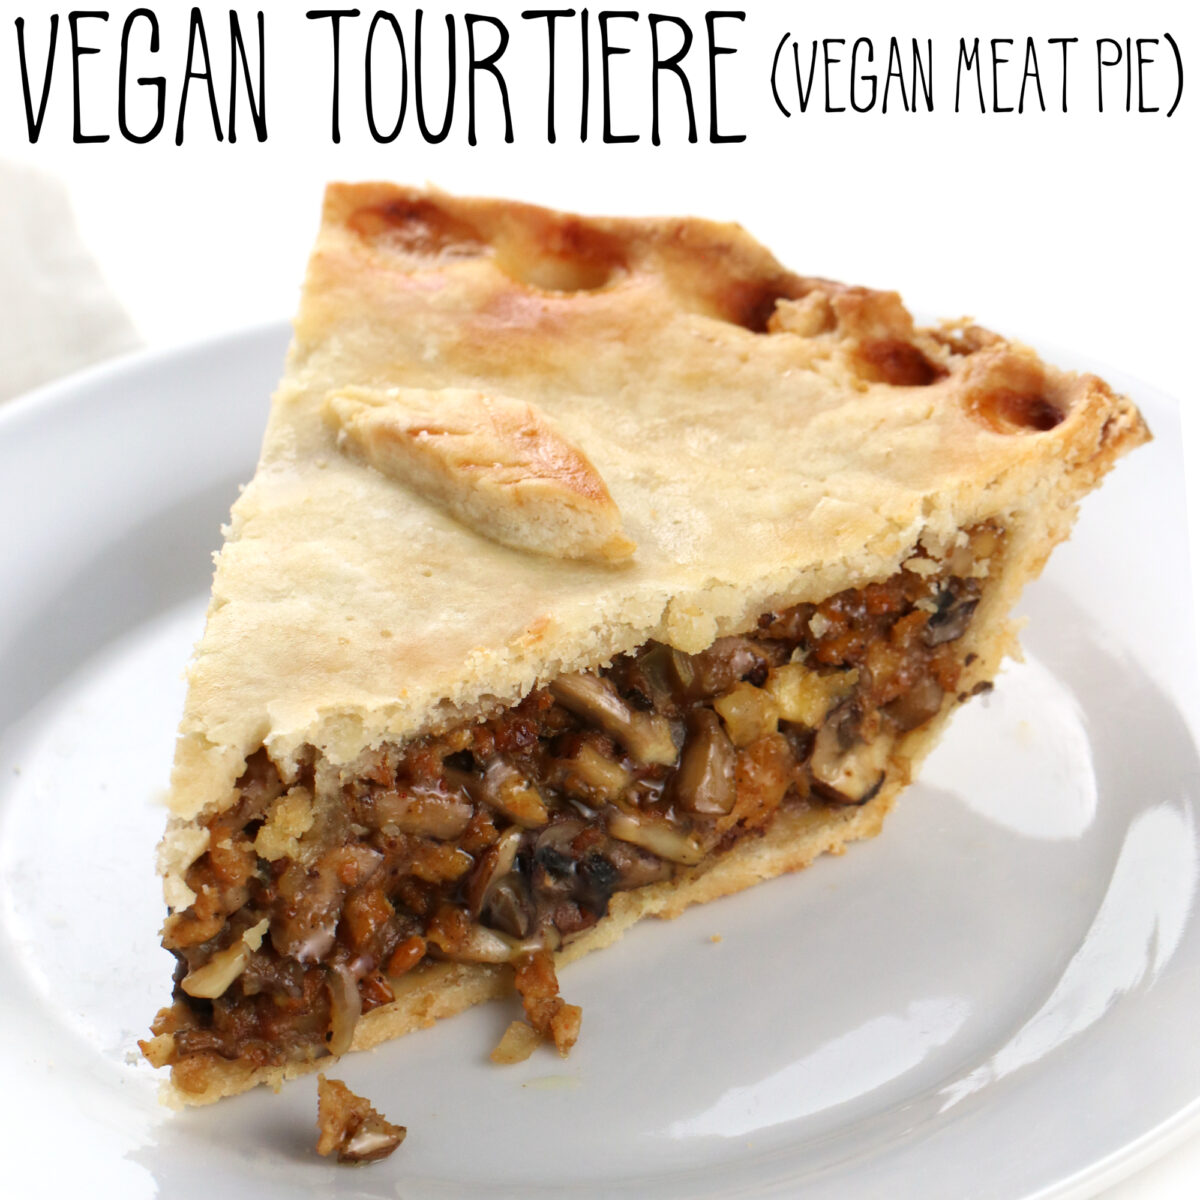 Vegan Tourtiere (Vegan Meat Pie)